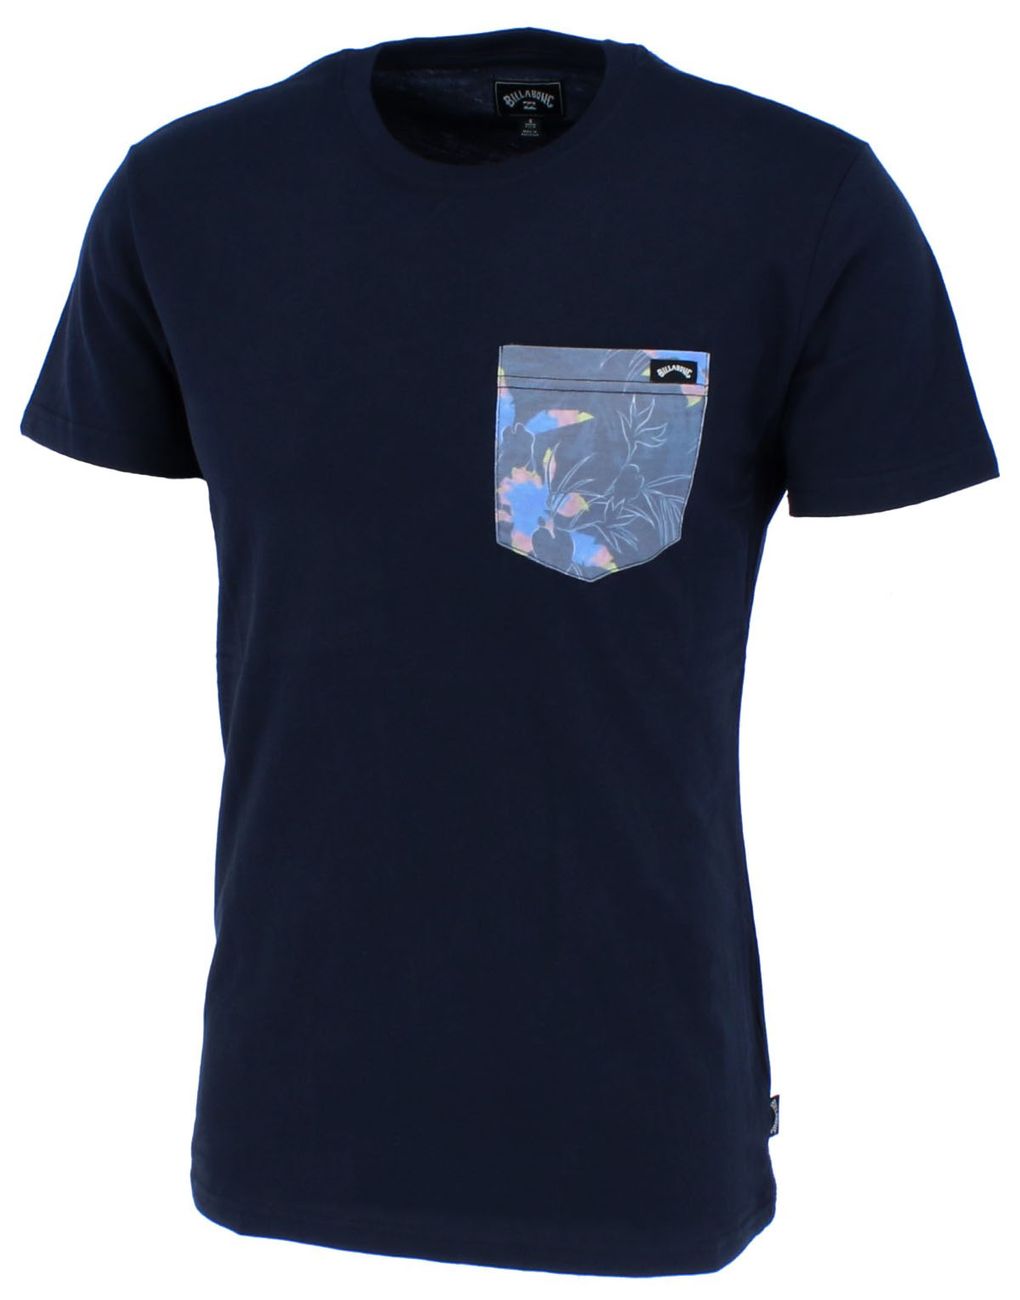 BILLABONG ALLDAY PRINTED CREW Herren T-Shirt mit Brusttasche - BillaBong - SAGATOO - 3664564912413